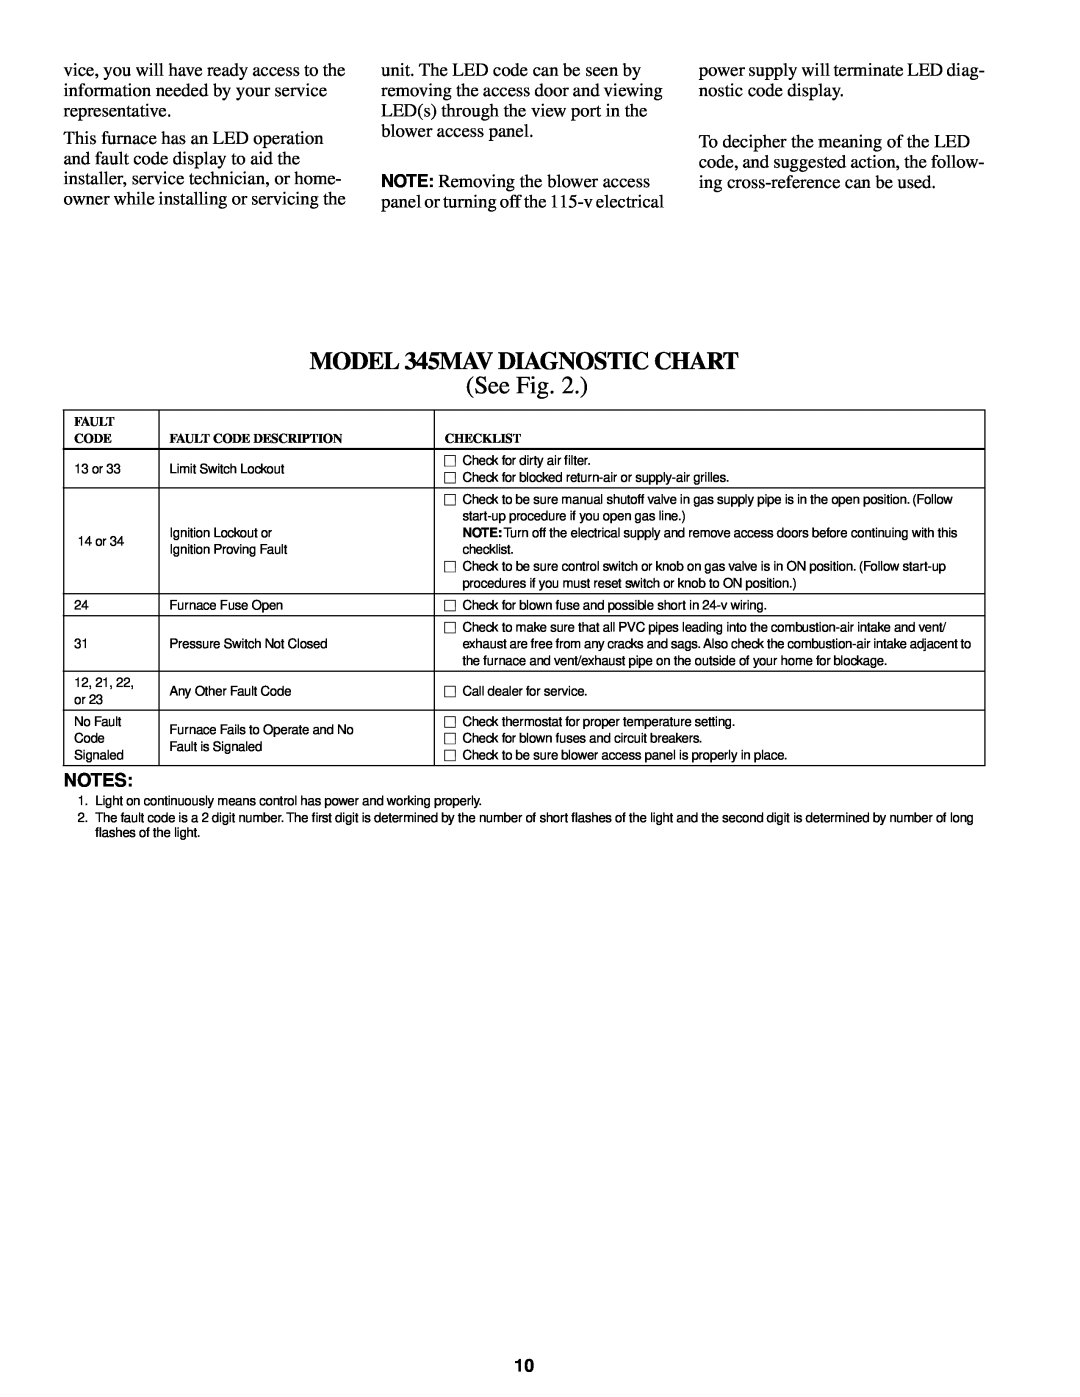 Bryant manual MODEL 345MAV DIAGNOSTIC CHART, See Fig 